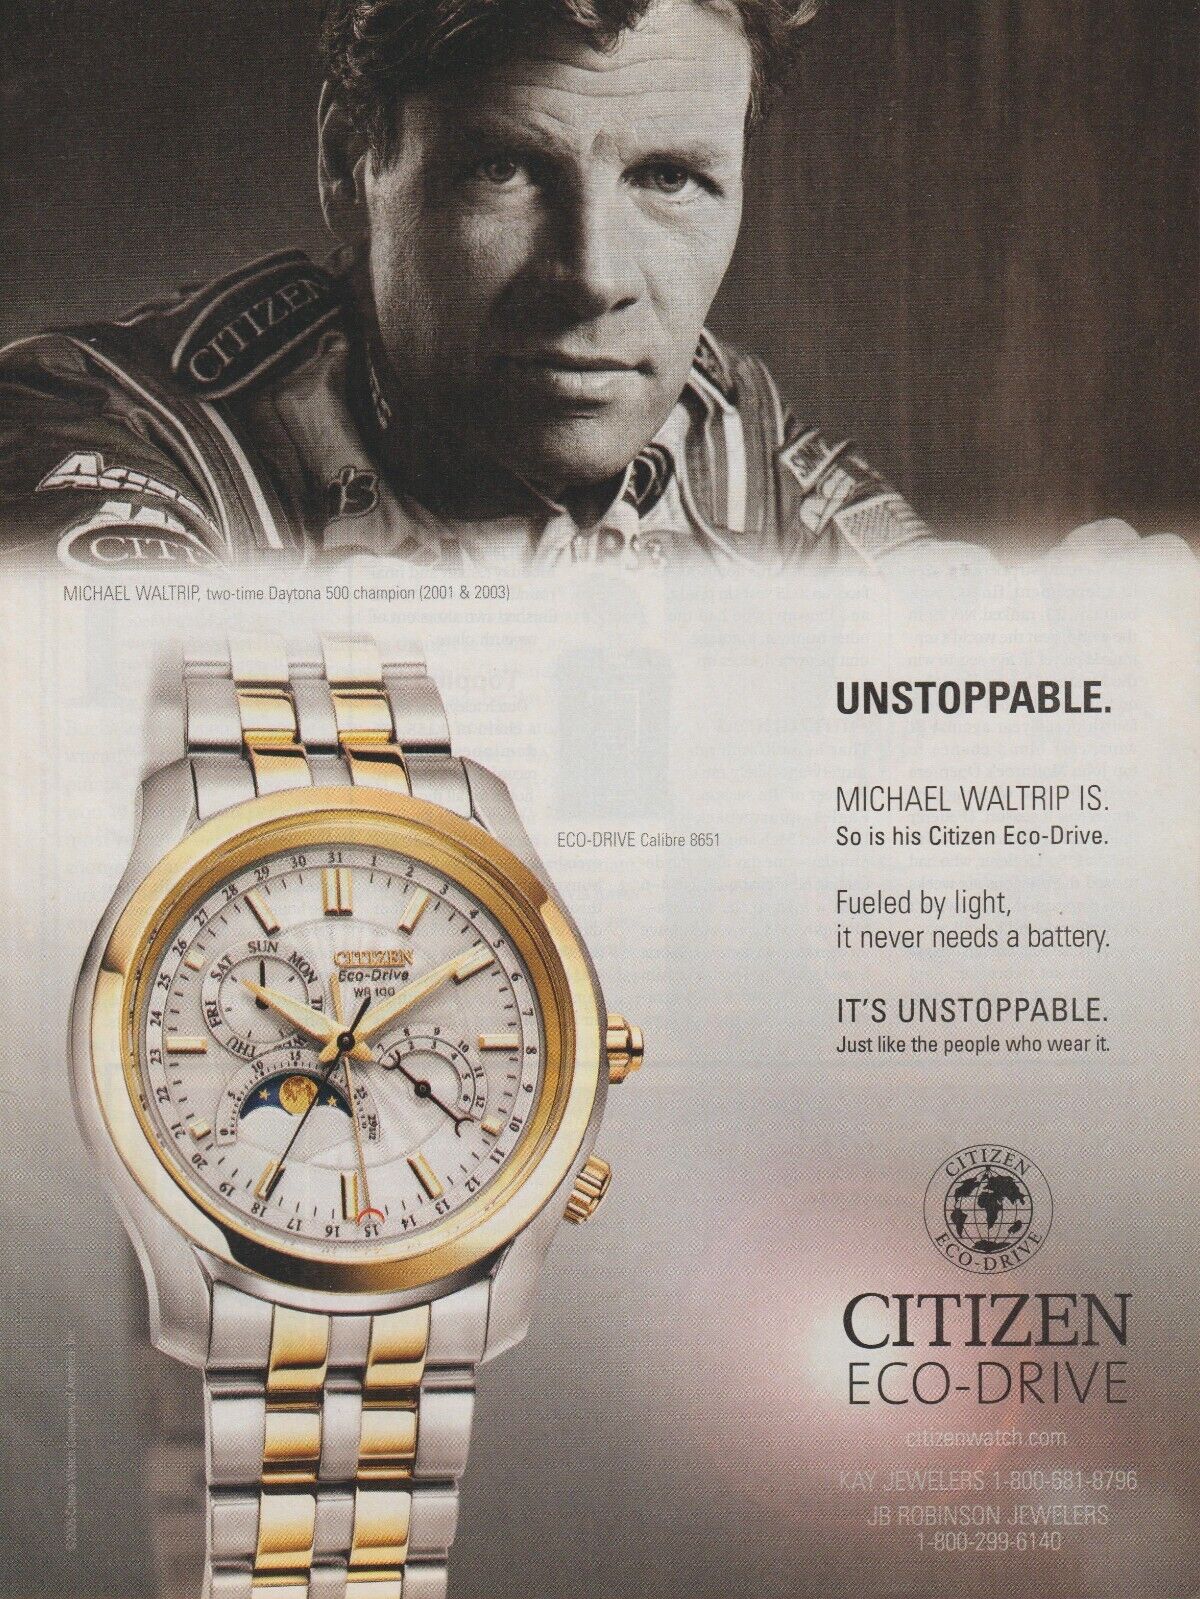 2005 Citizen Watch - NASCAR Champion Driver Michael Waltrip - Print Ad Photo